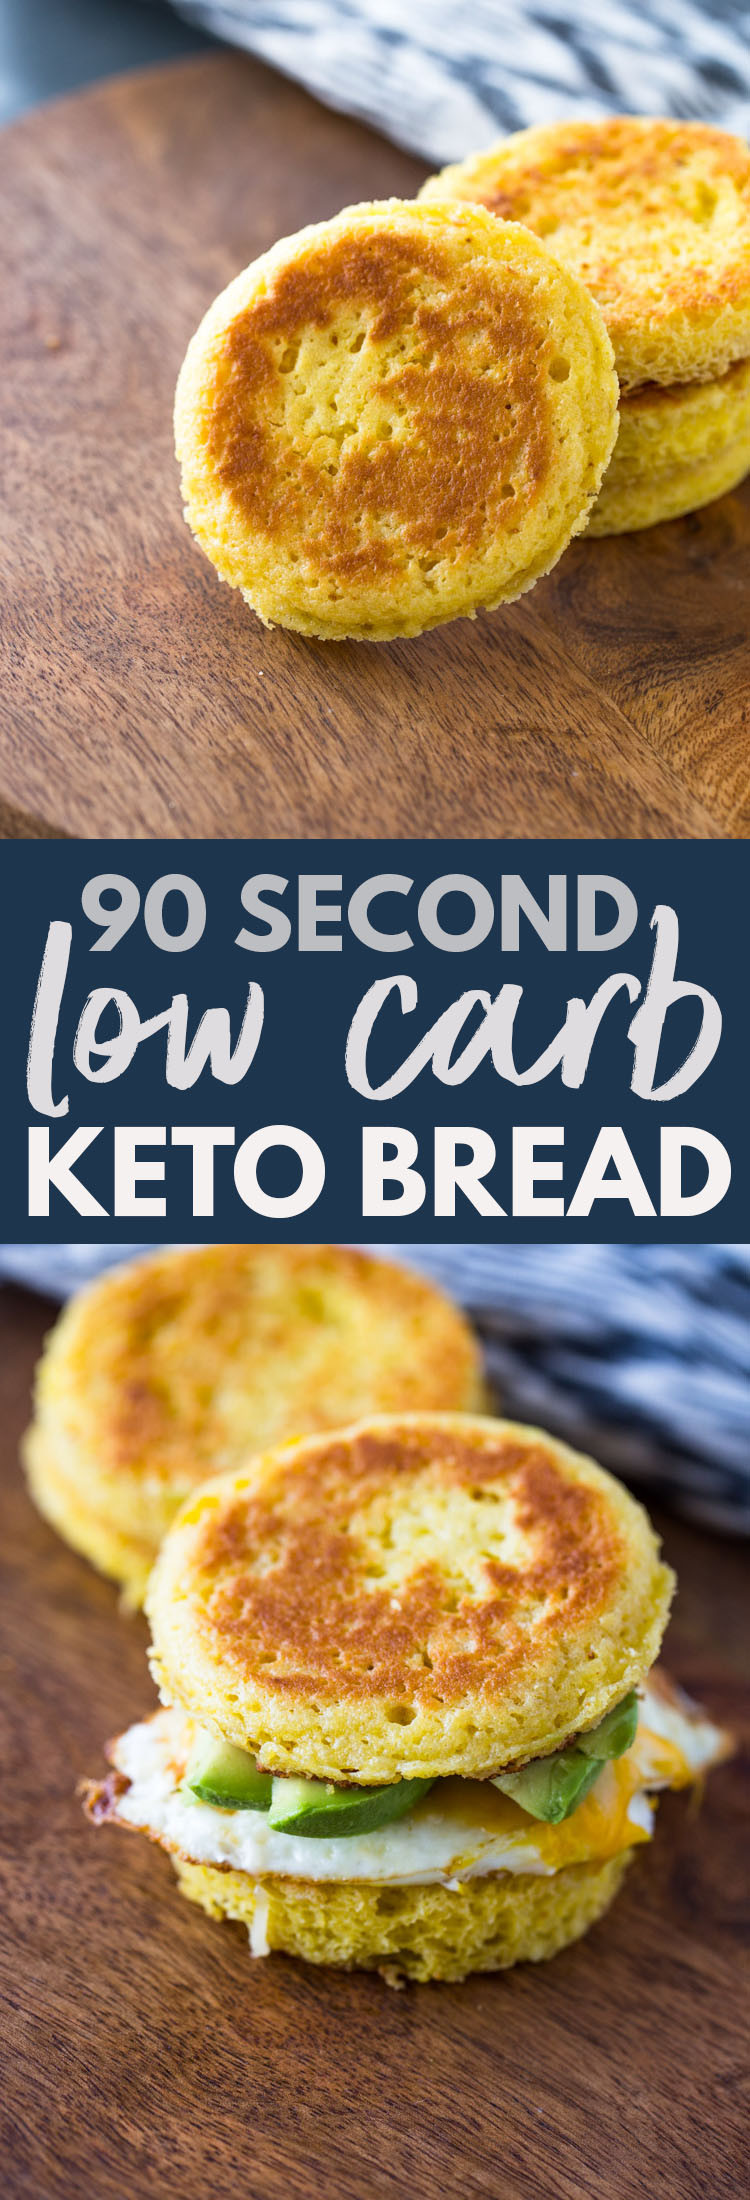 90 Second Bread Keto
 90 Second Microwavable Low Carb Keto Bread